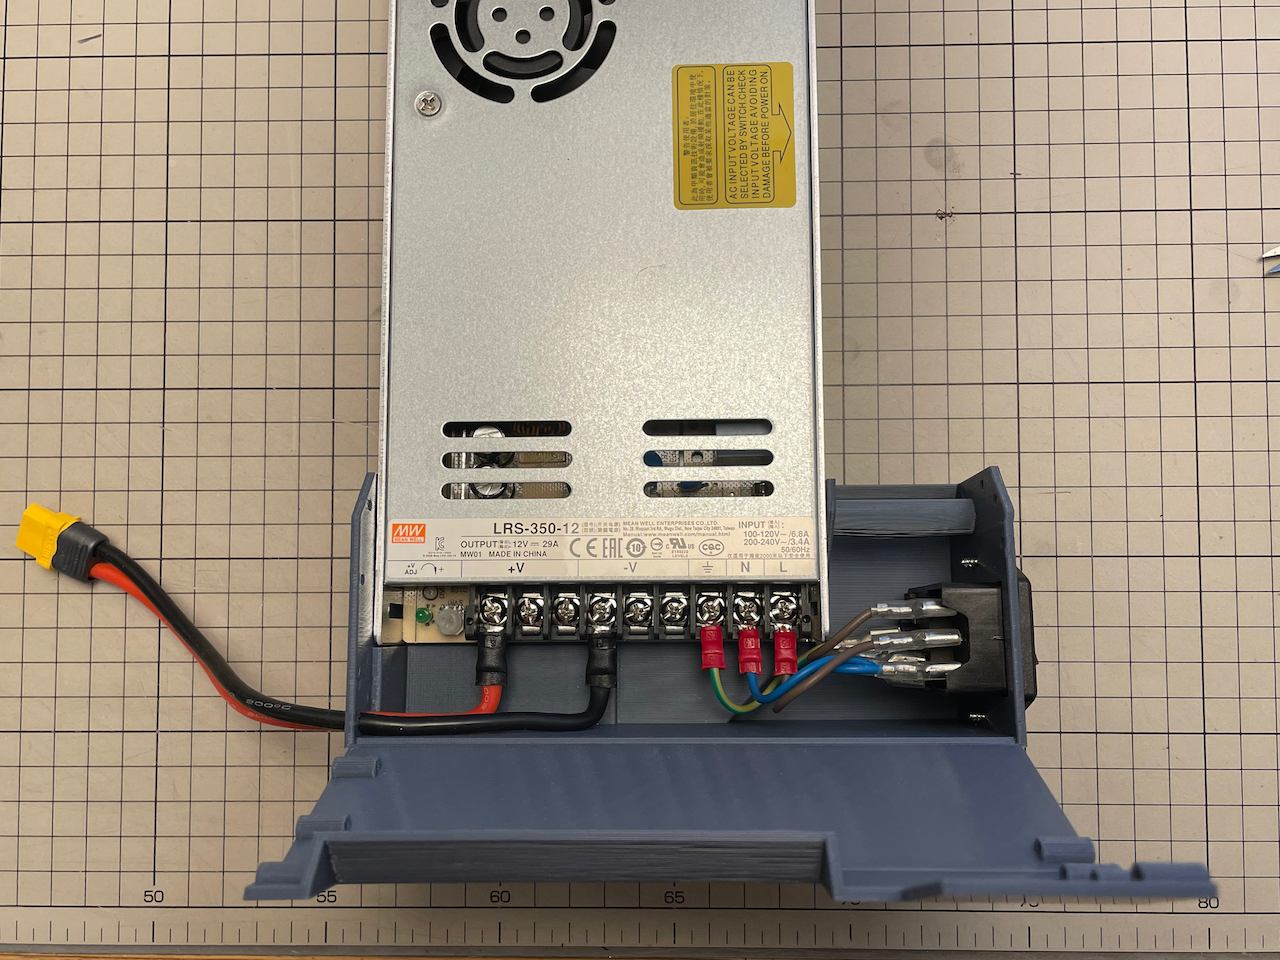 Printrbot Power Supply Case